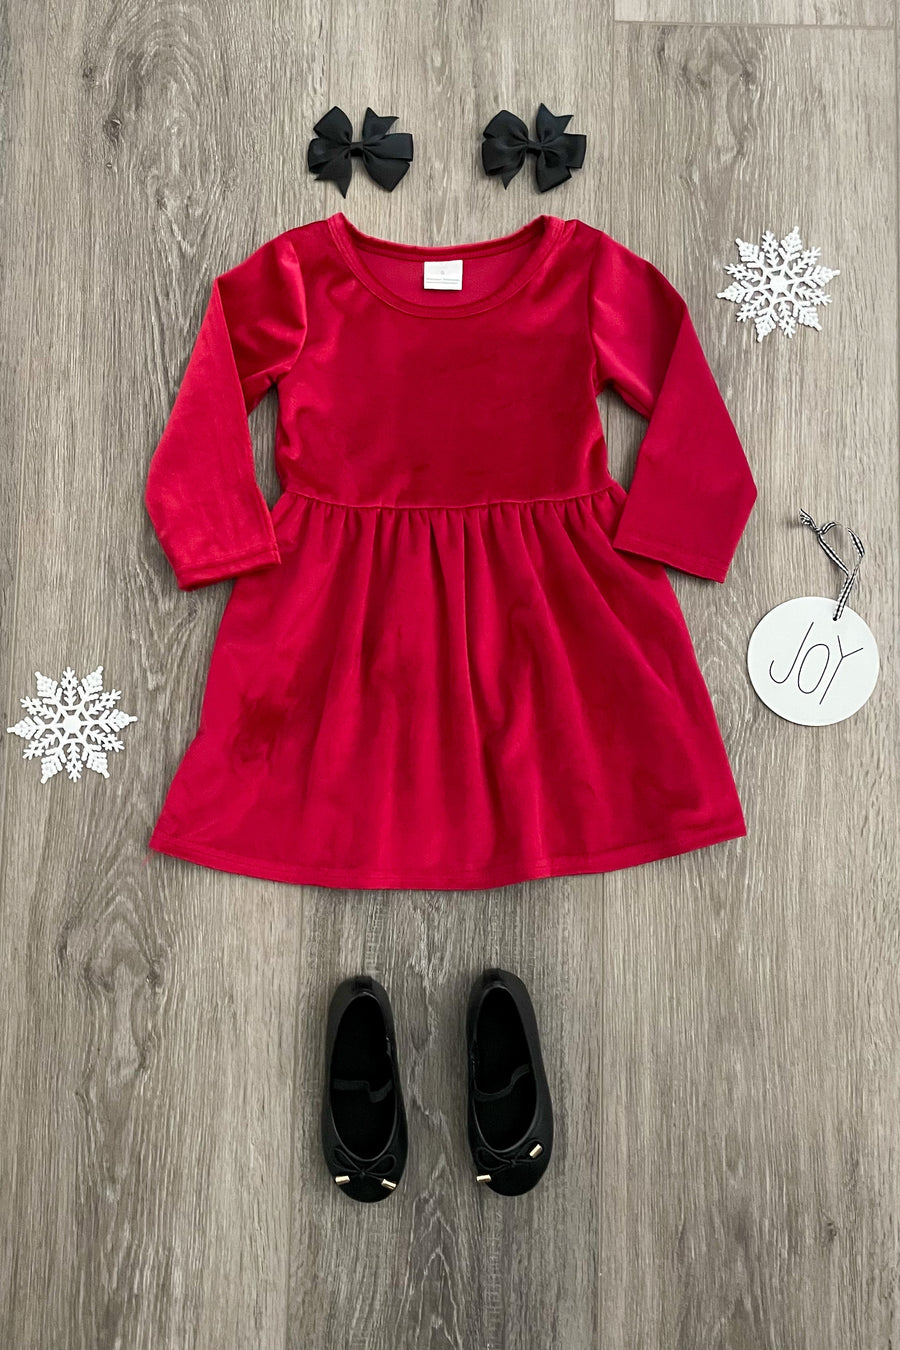 Velvet Cranberry Holiday Boutique Dress - Rylee Faith Designs